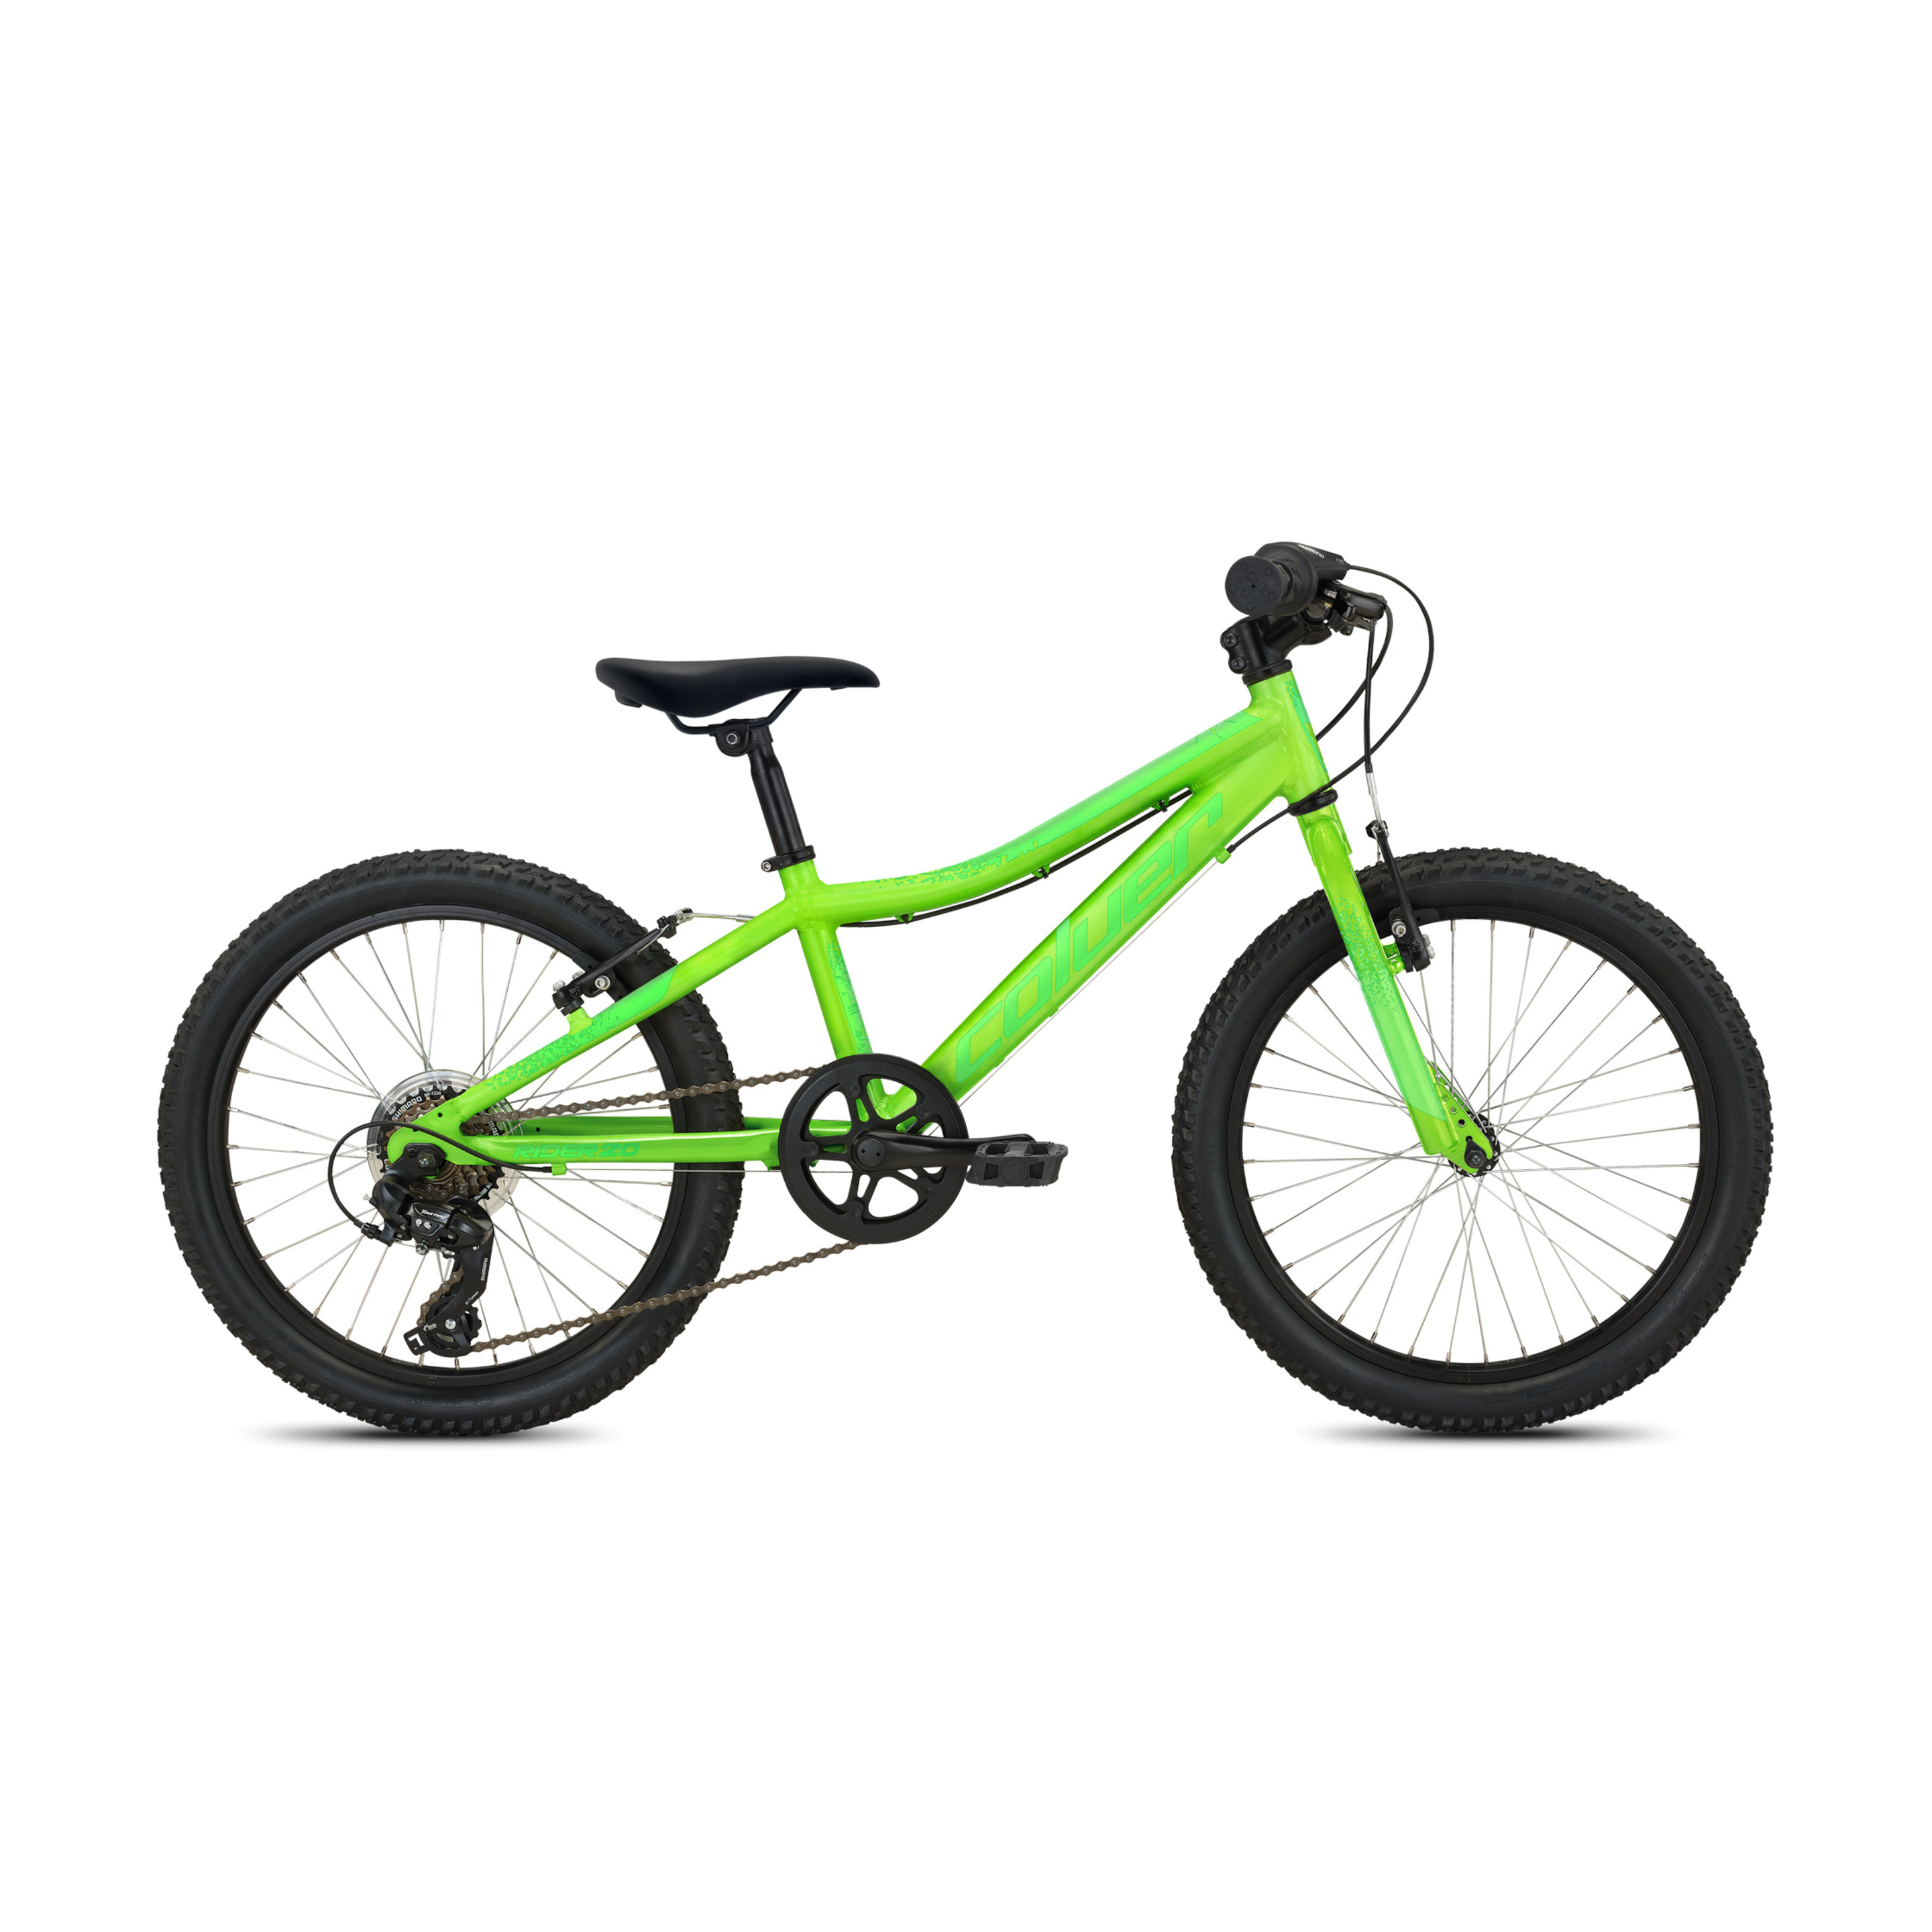 Bicicleta Rider 206 6 Velocidades Verde